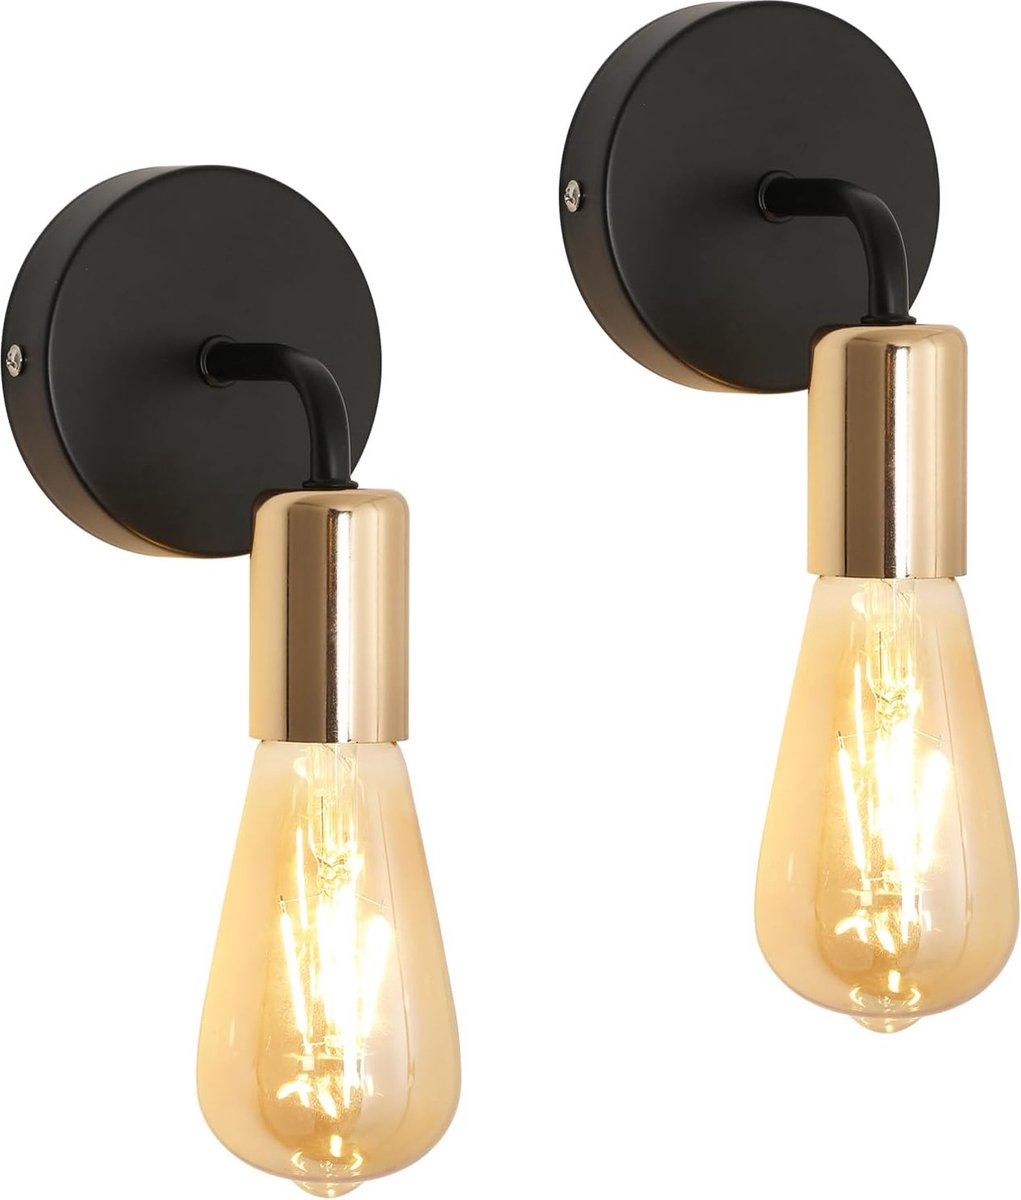 Goeco wandlamp - 19cm - Klein - E27 wandlamp - 2 pack - Lampen Niet Inbegrepen